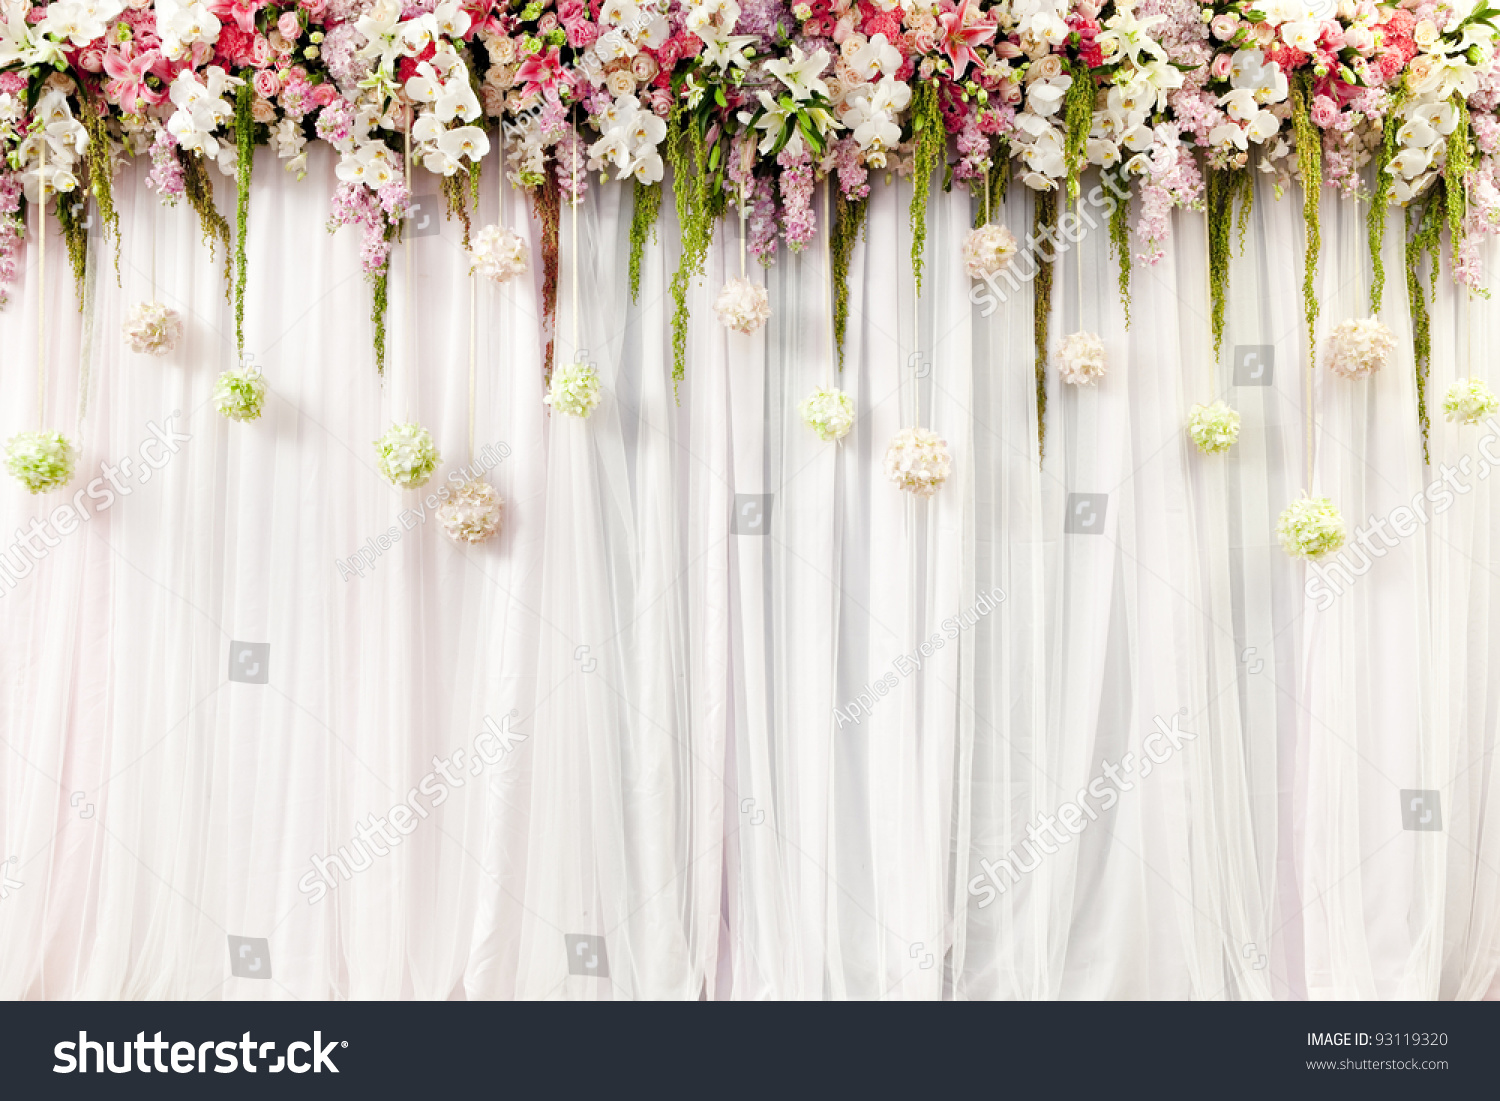 Beautiful Flower Wedding Decoration Stock Photo 93119320 : Shutterstock